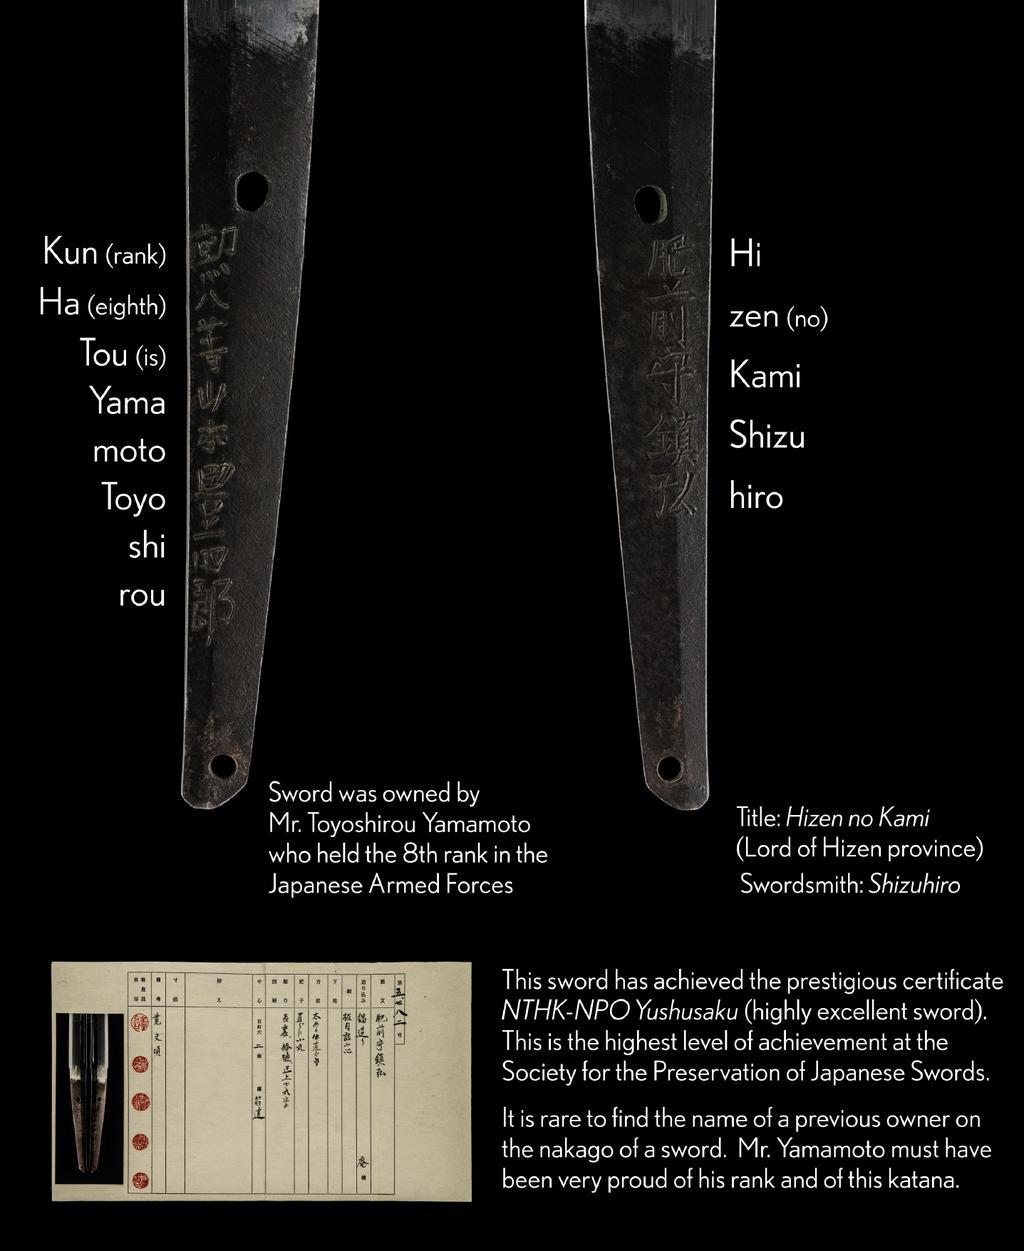 This katana was awarded the prestigious rank of NTHK-NPO Yushusaku the highest honour at the non-profit sword preservation society.